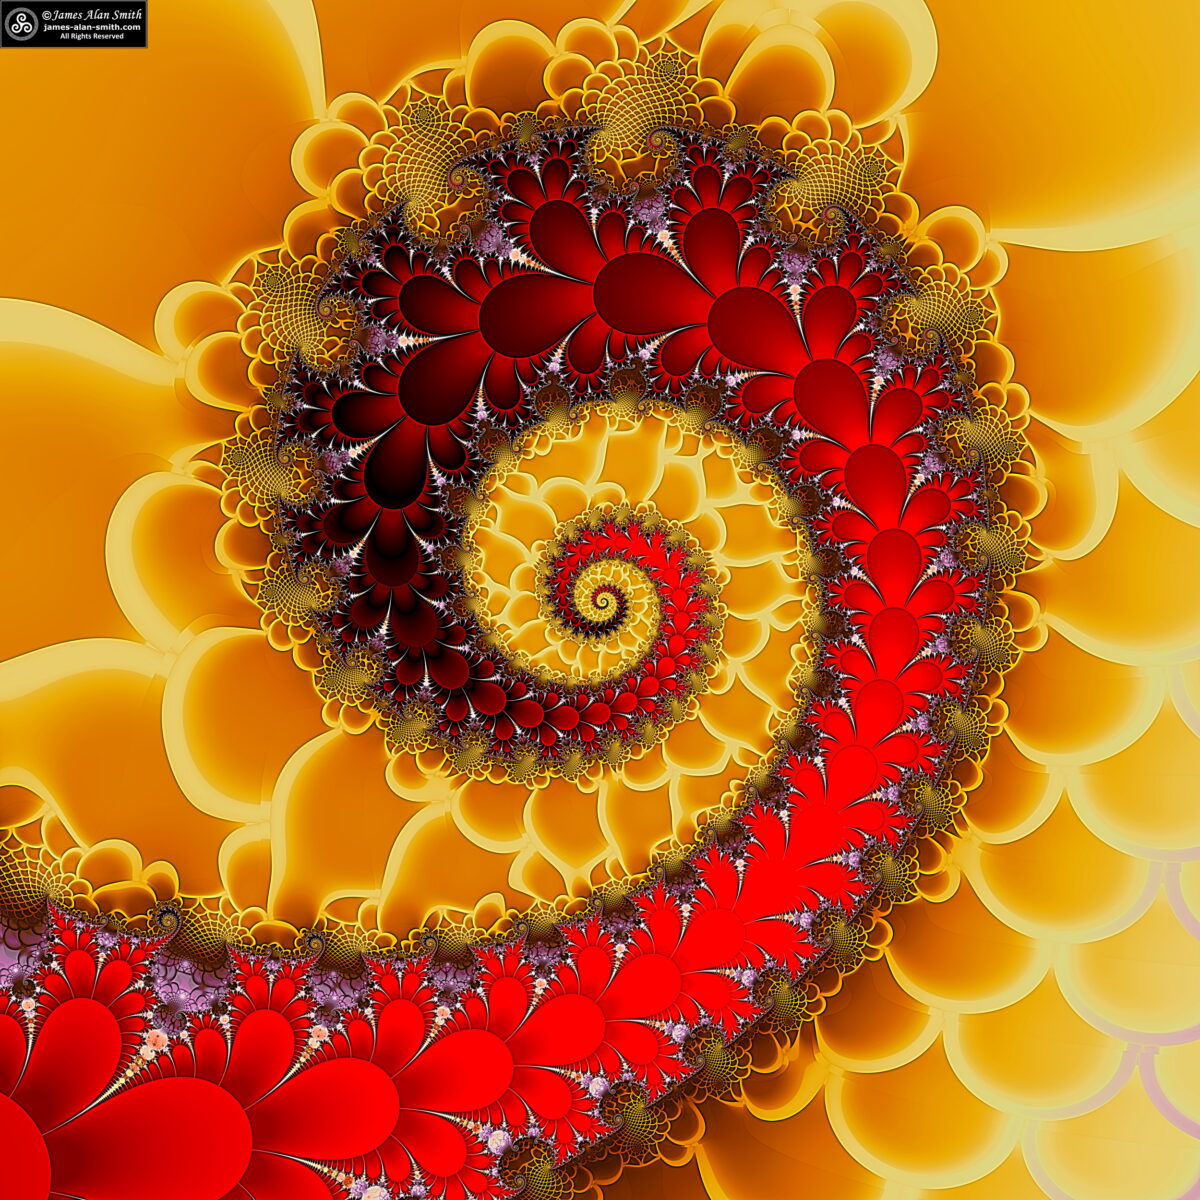 Just a Fractal Spiral: Artwork by James Alan Smith